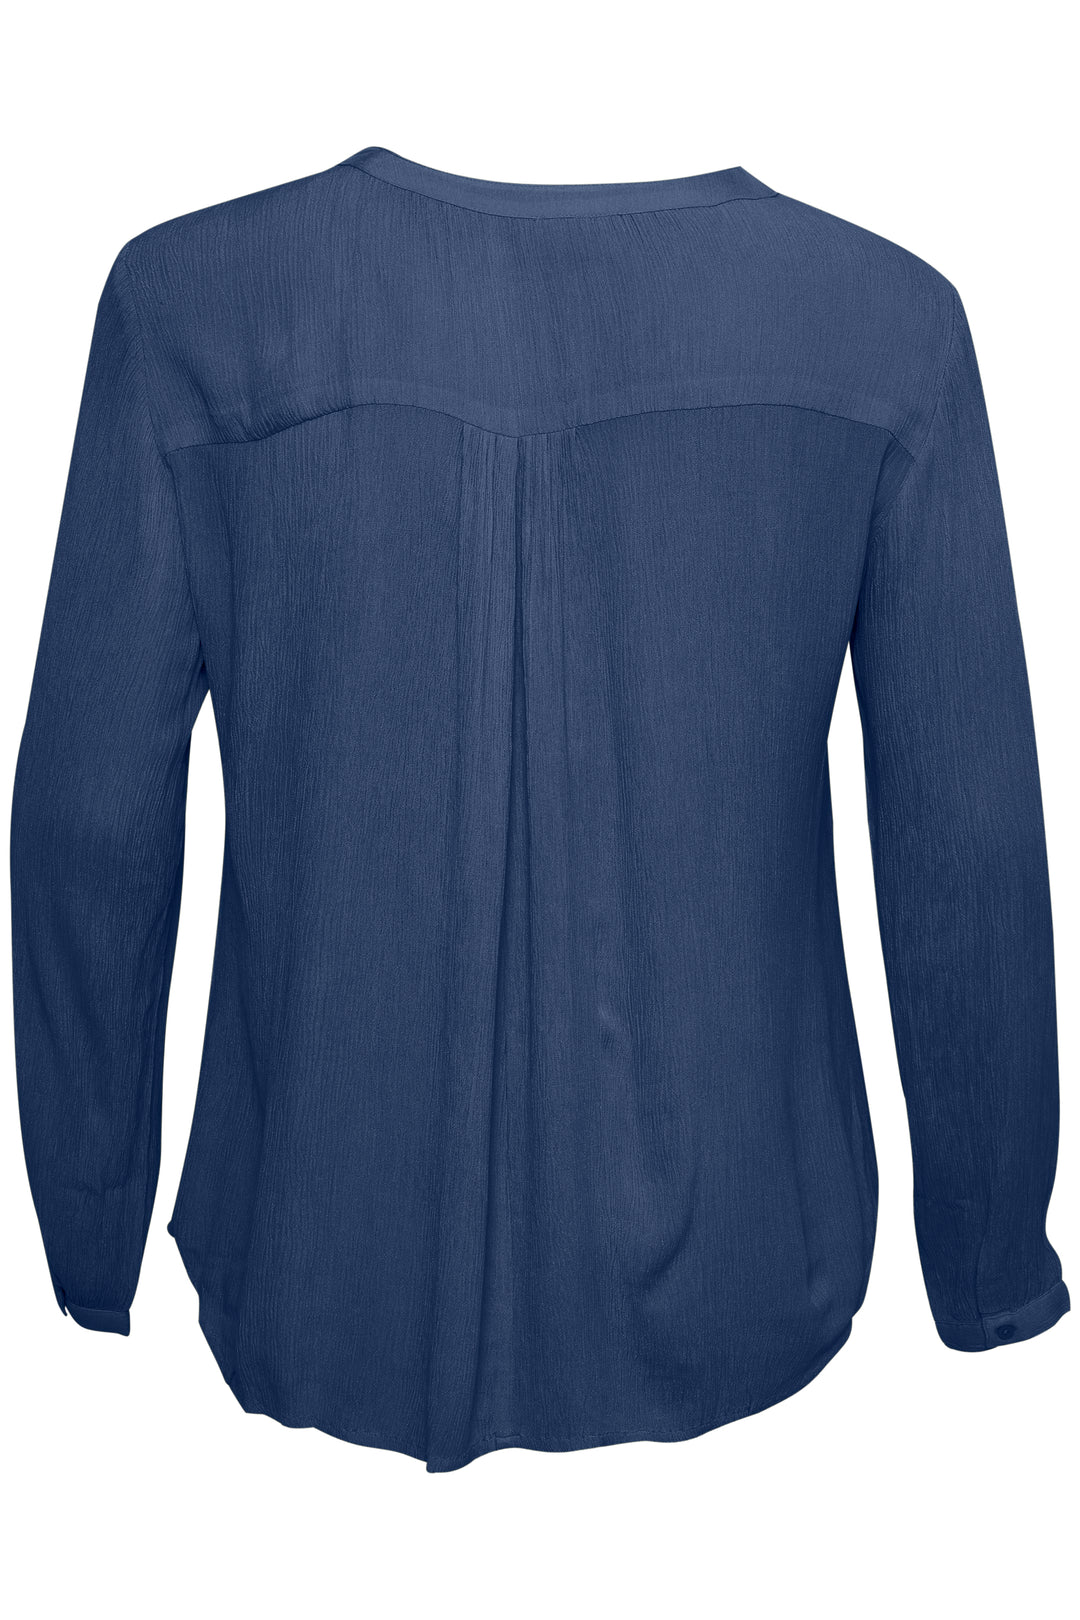 tijdloze vintage indigo blouse van ecovero viscose